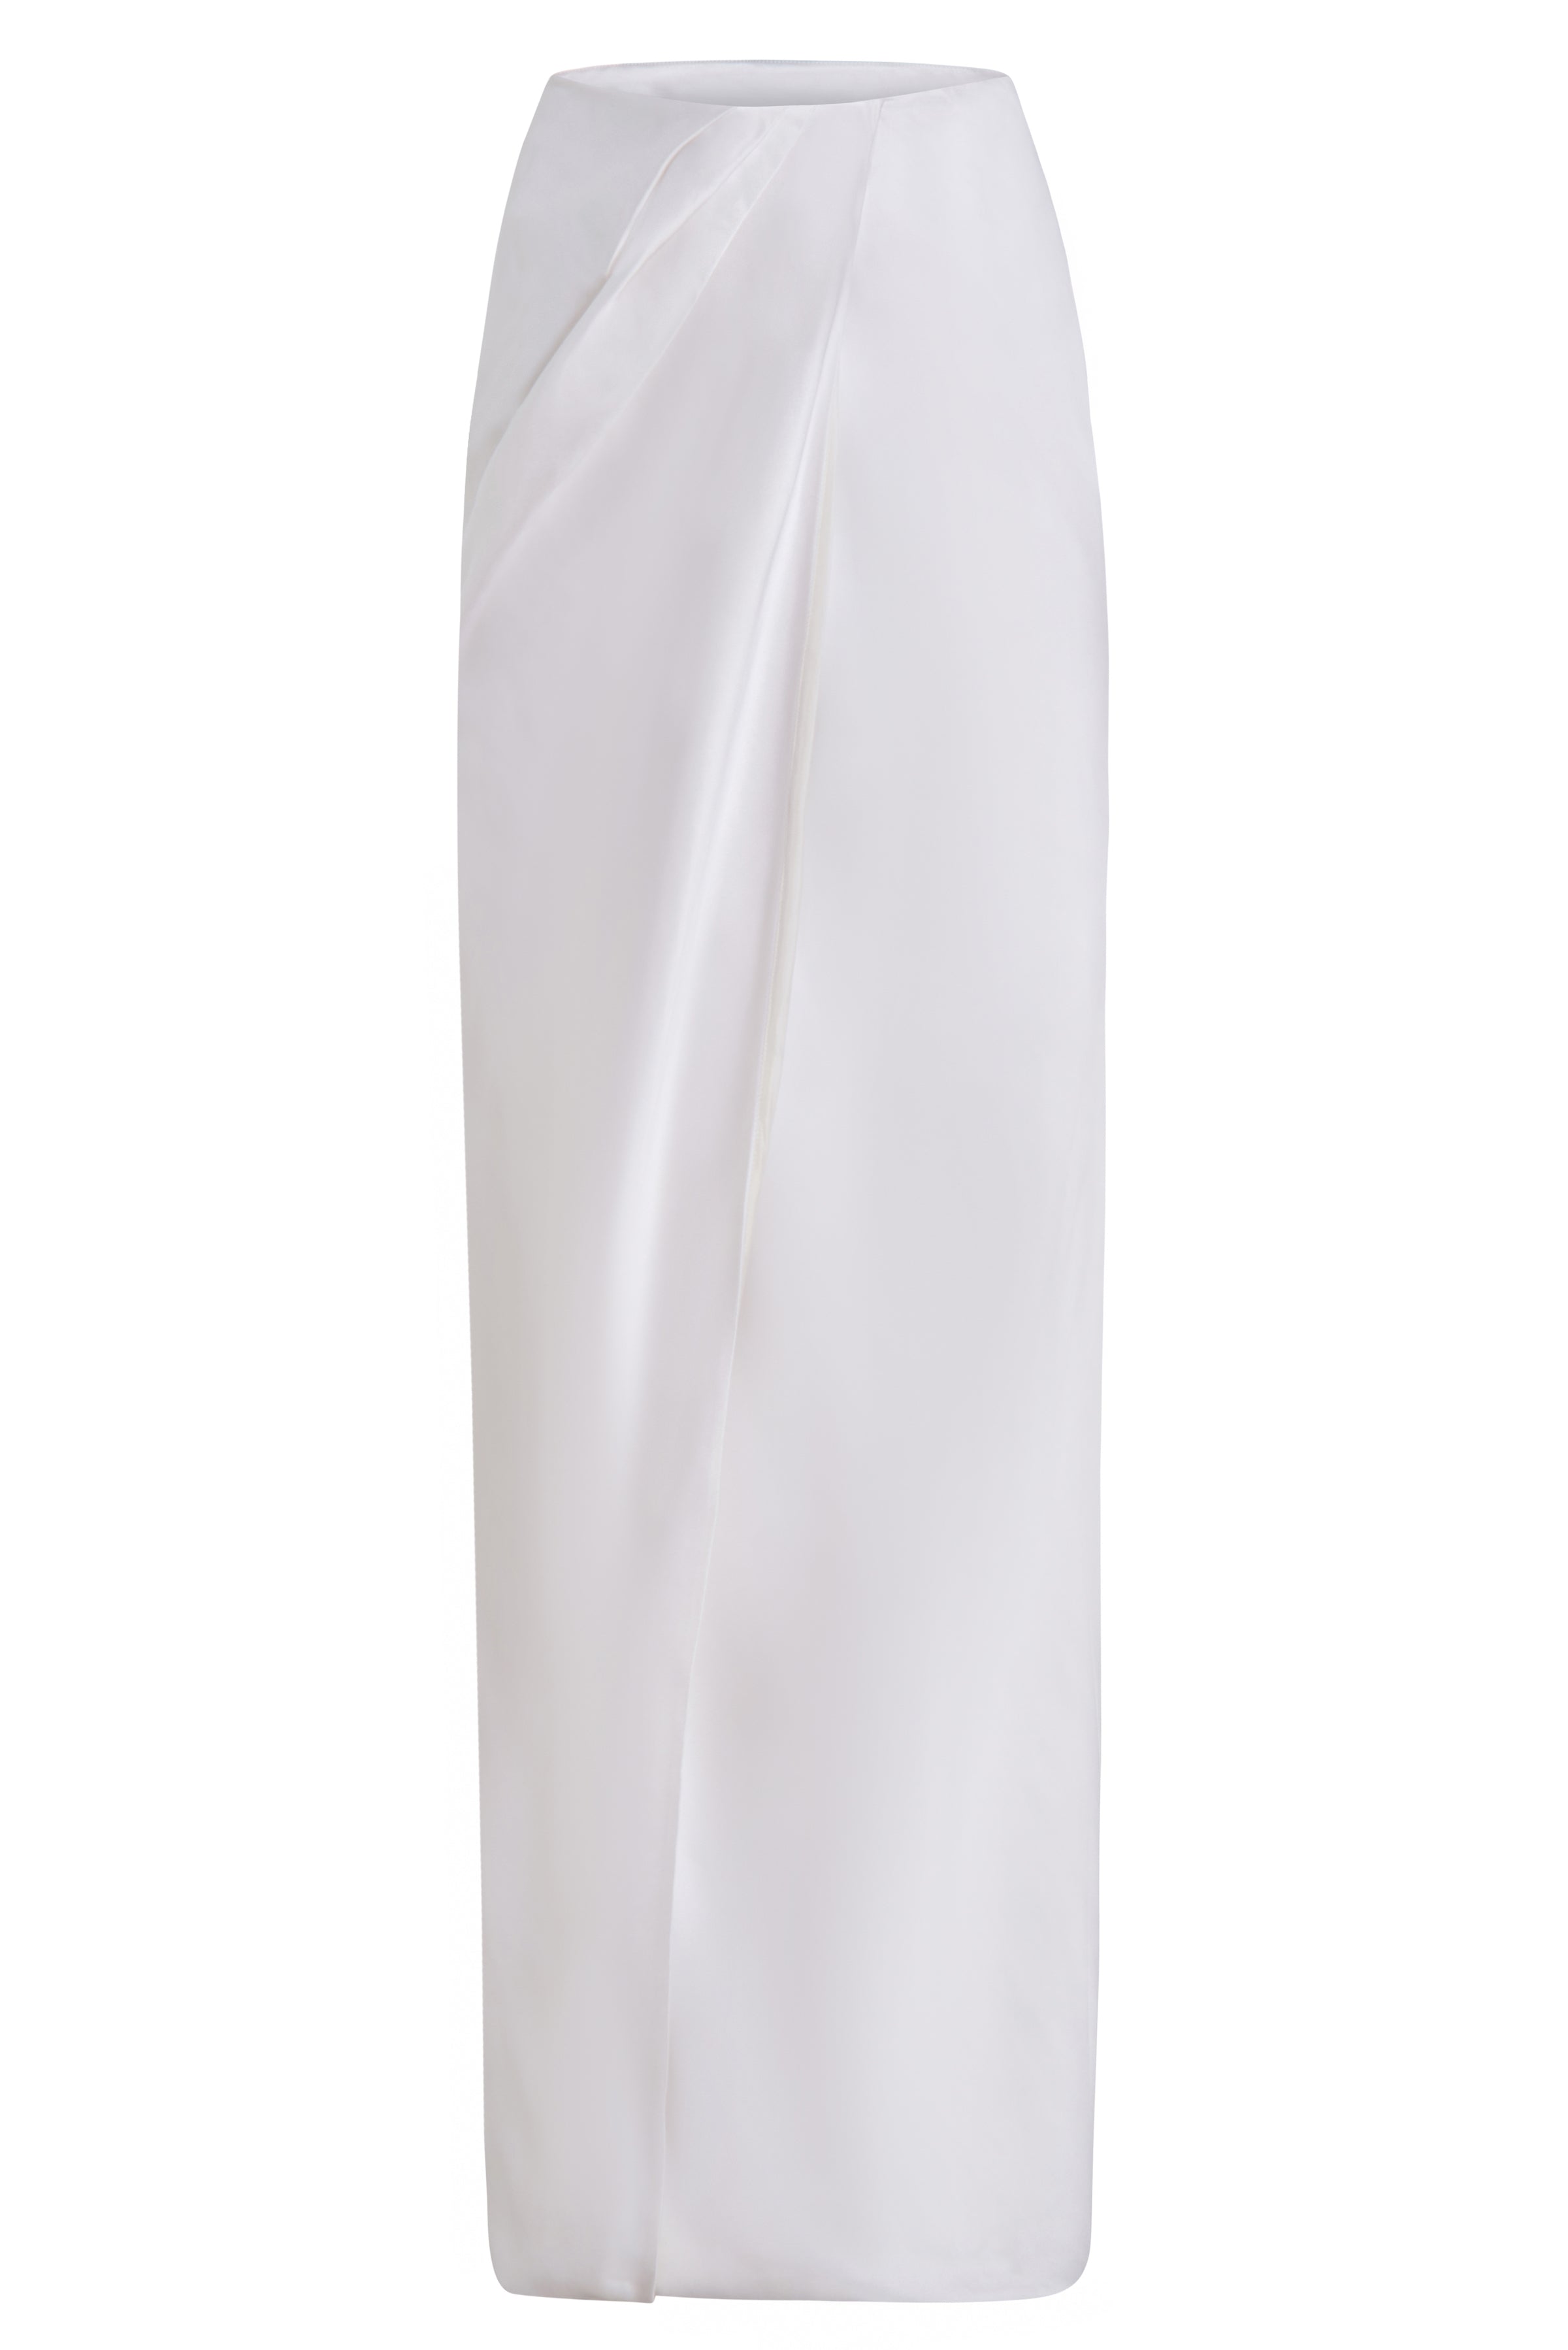 Audrey White Duchess Satin Draped Skirt